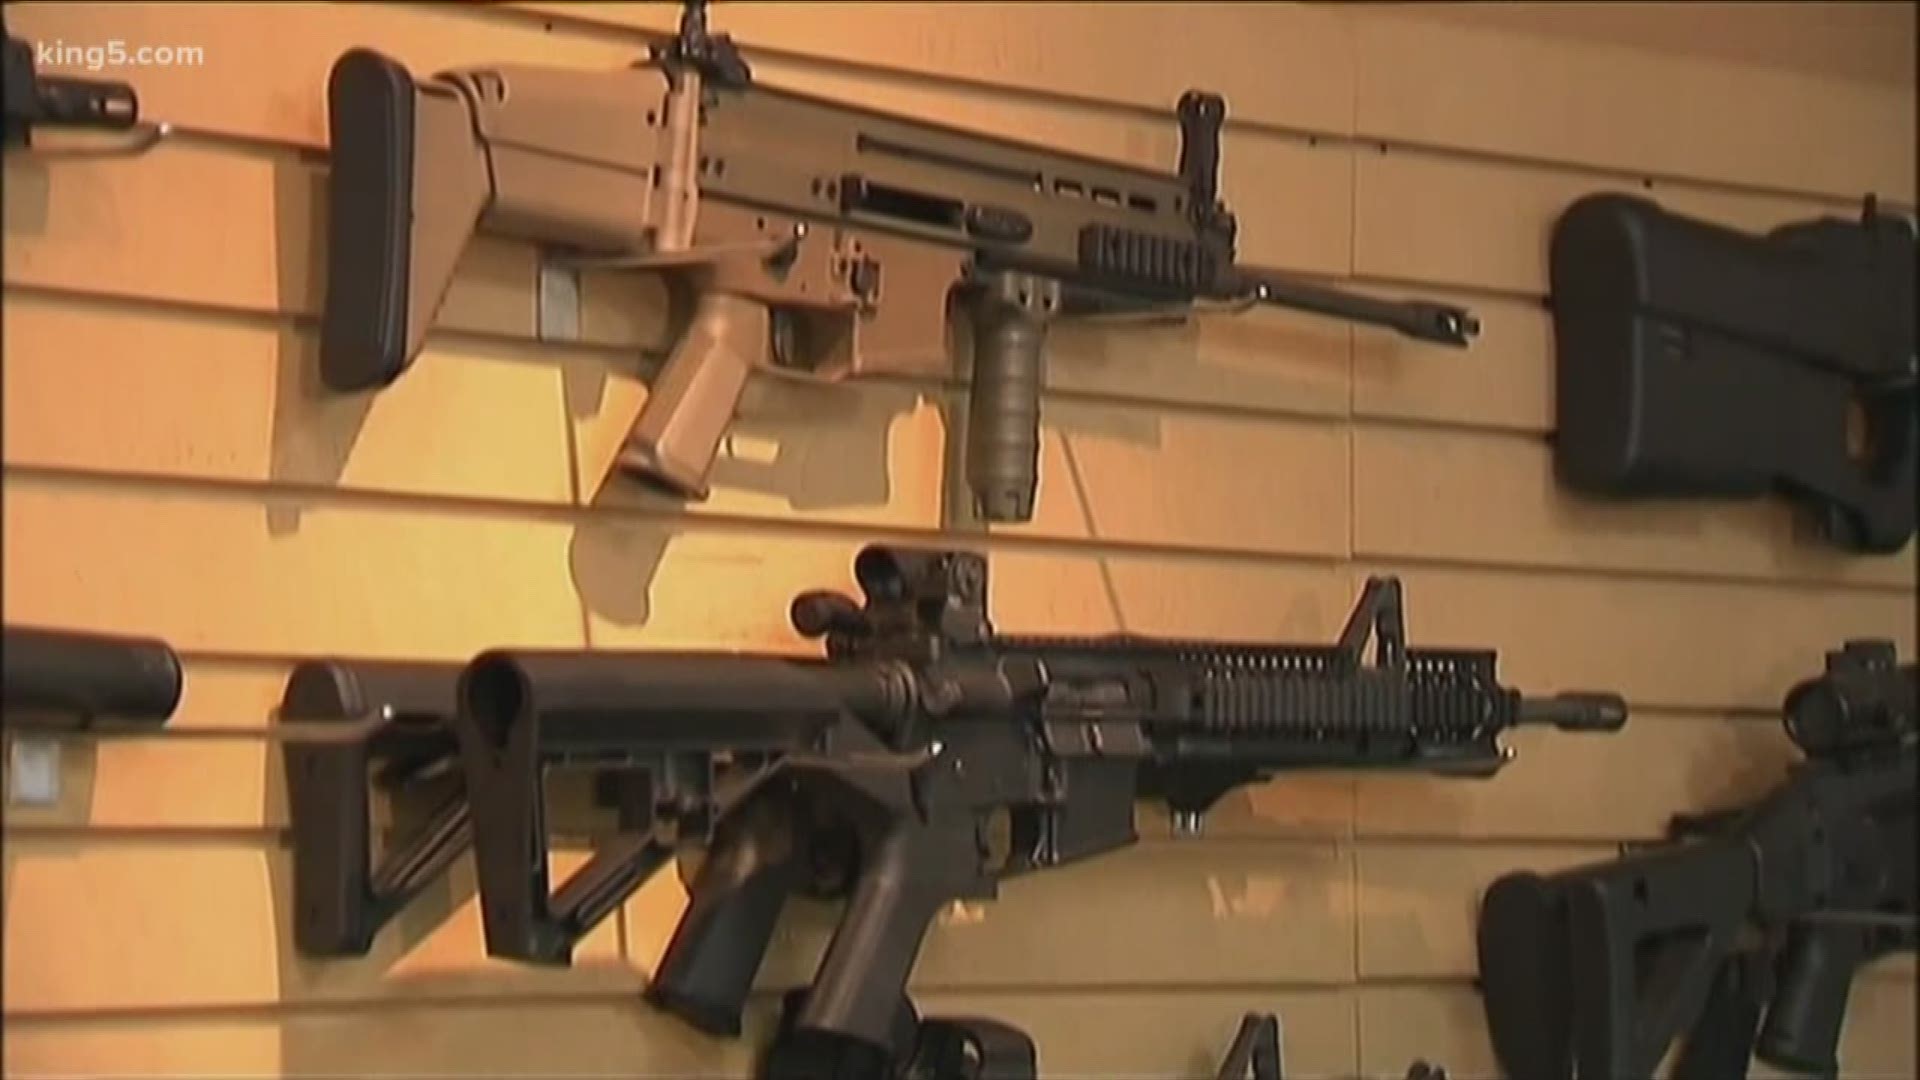 Attorney General Bob Ferguson announced a ban on assault-style rifles.